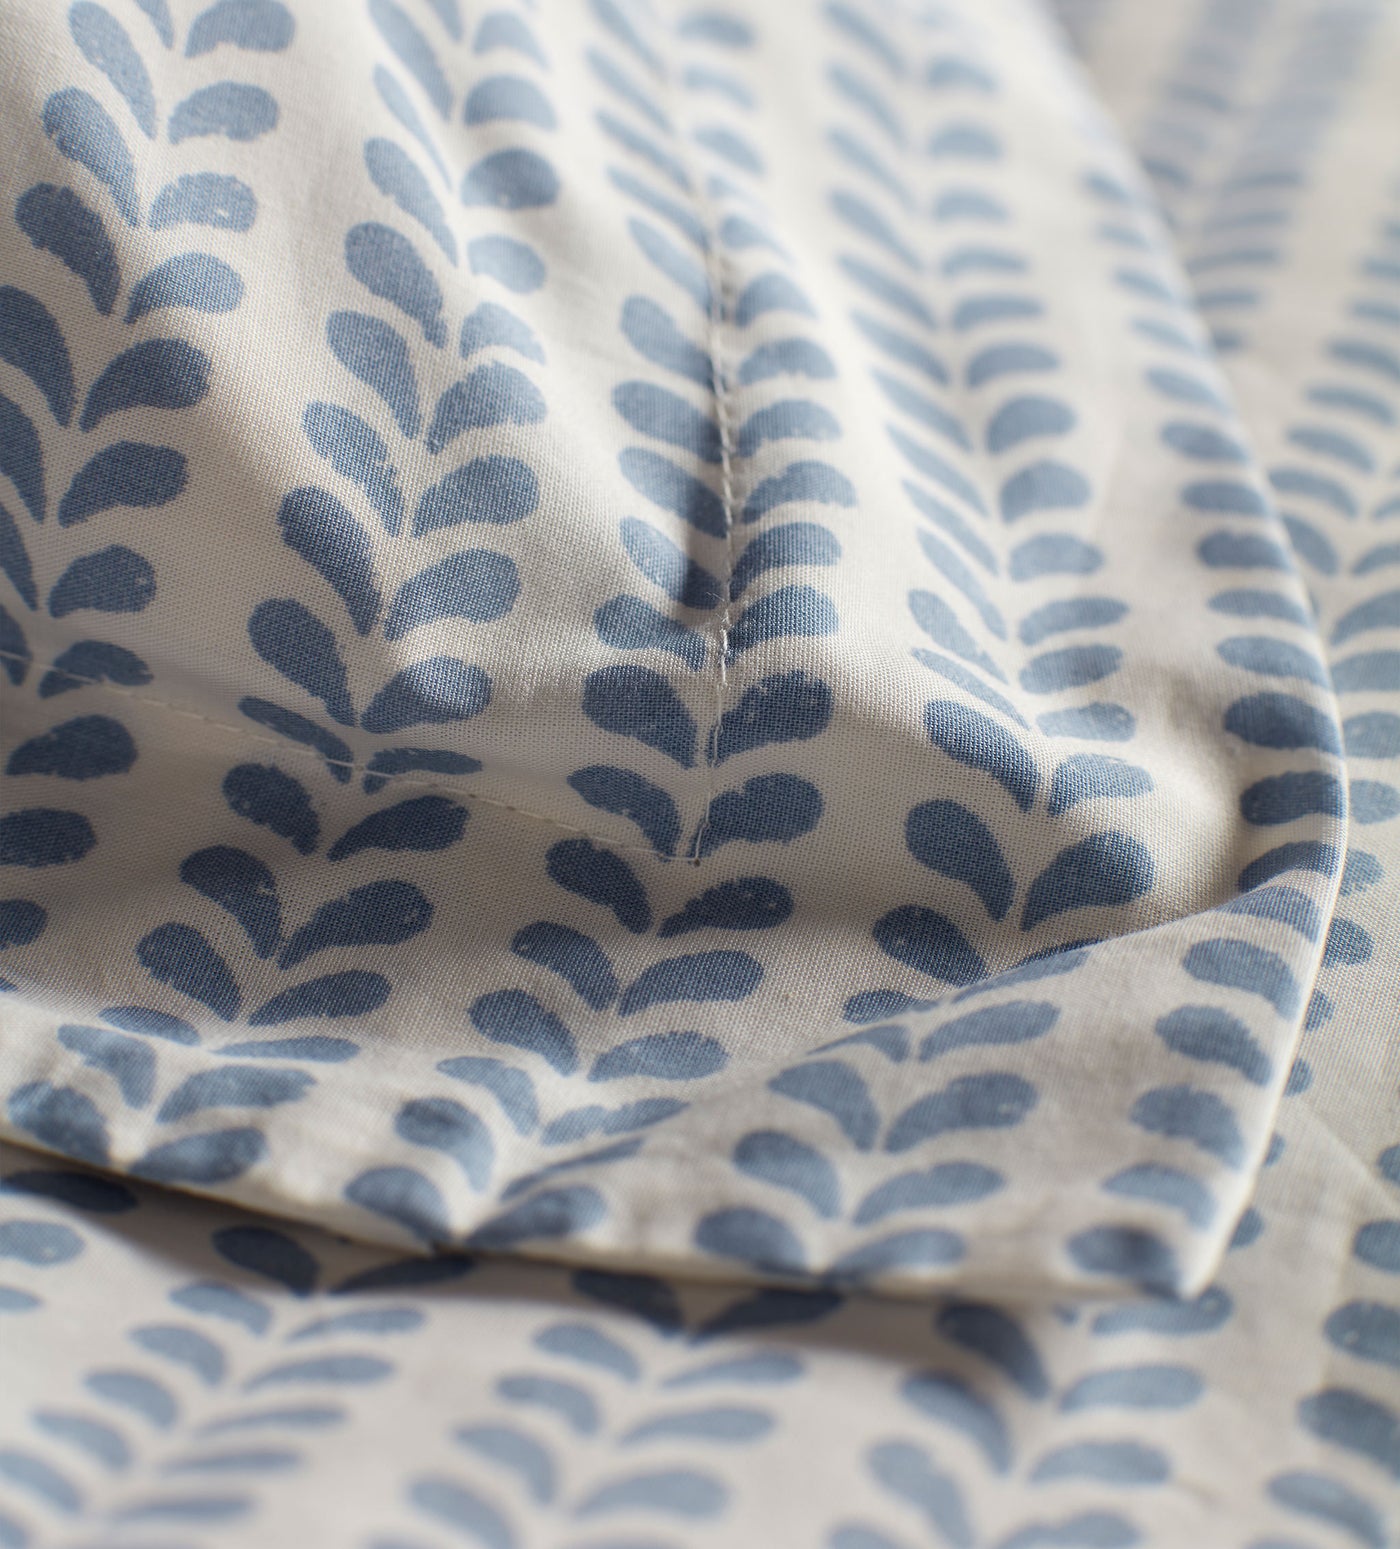 Molly Mahon Blue Bindi 100% Cotton Bed Linen